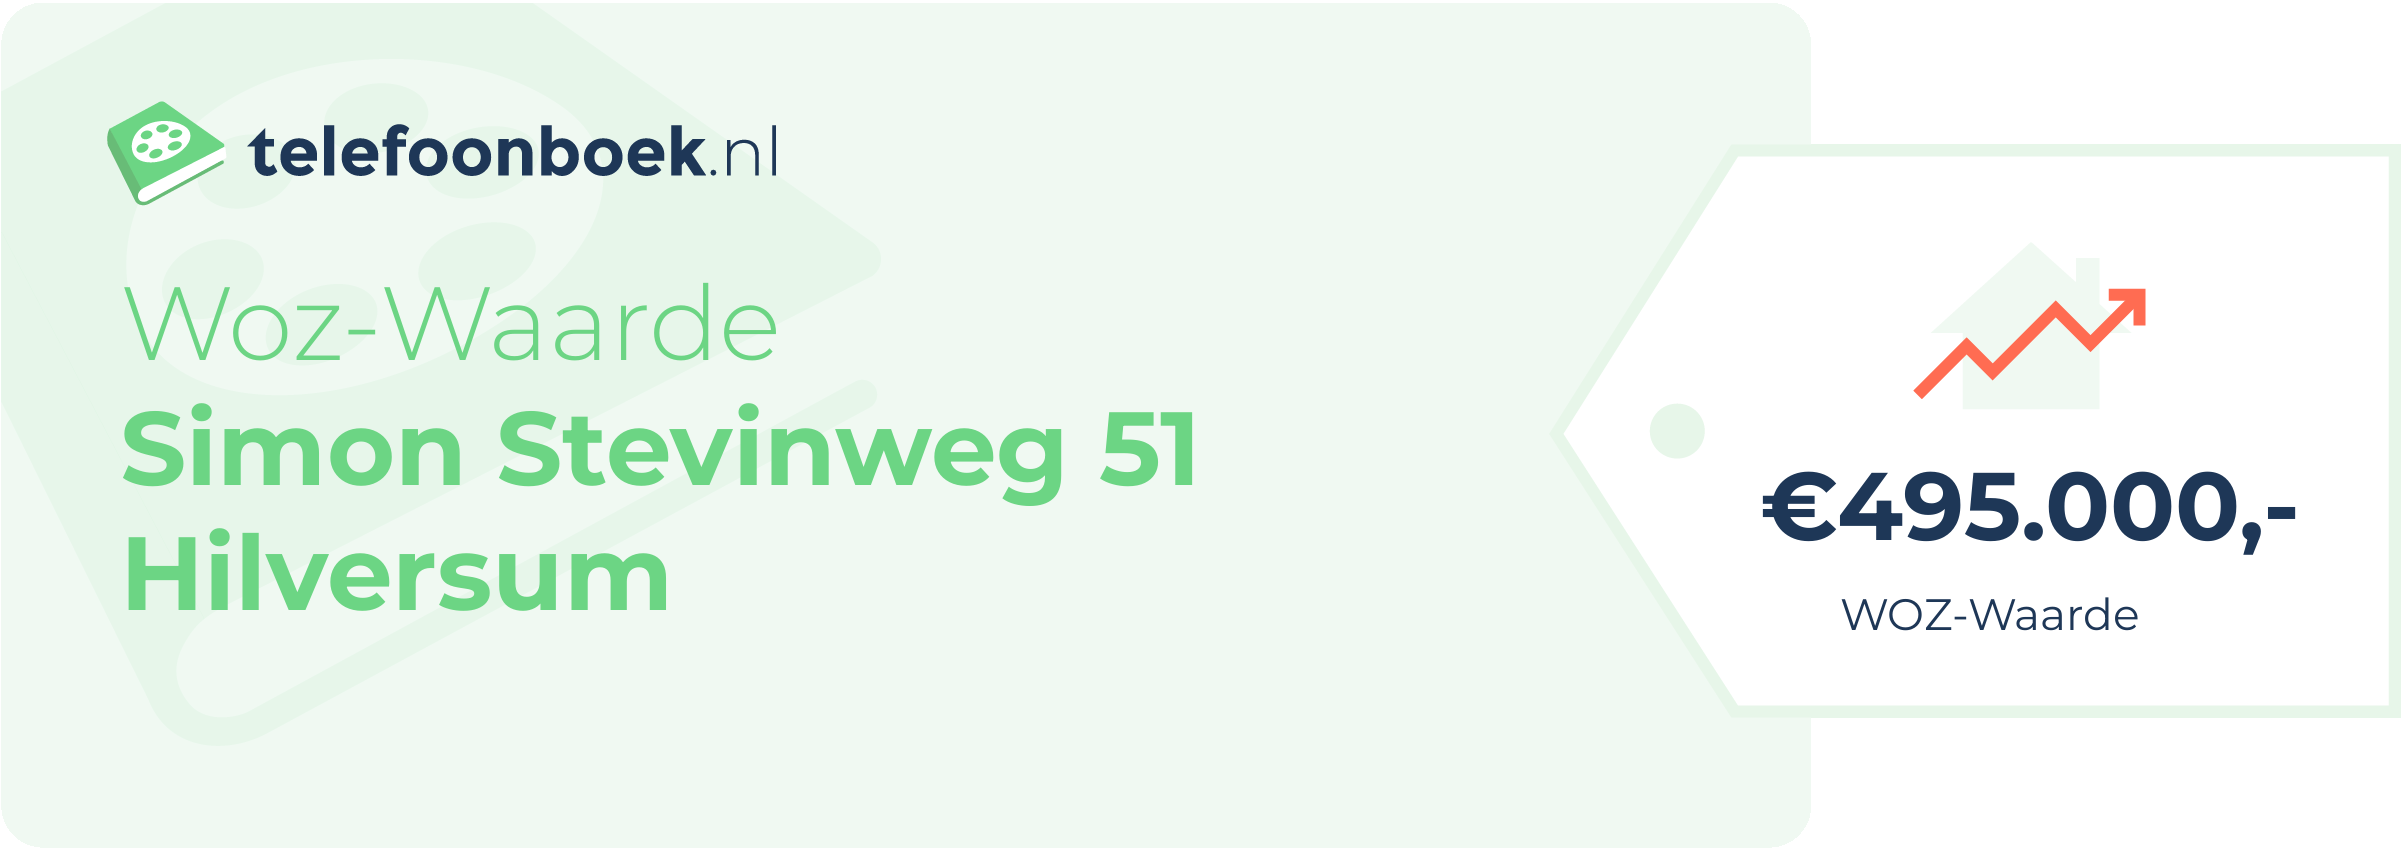 WOZ-waarde Simon Stevinweg 51 Hilversum